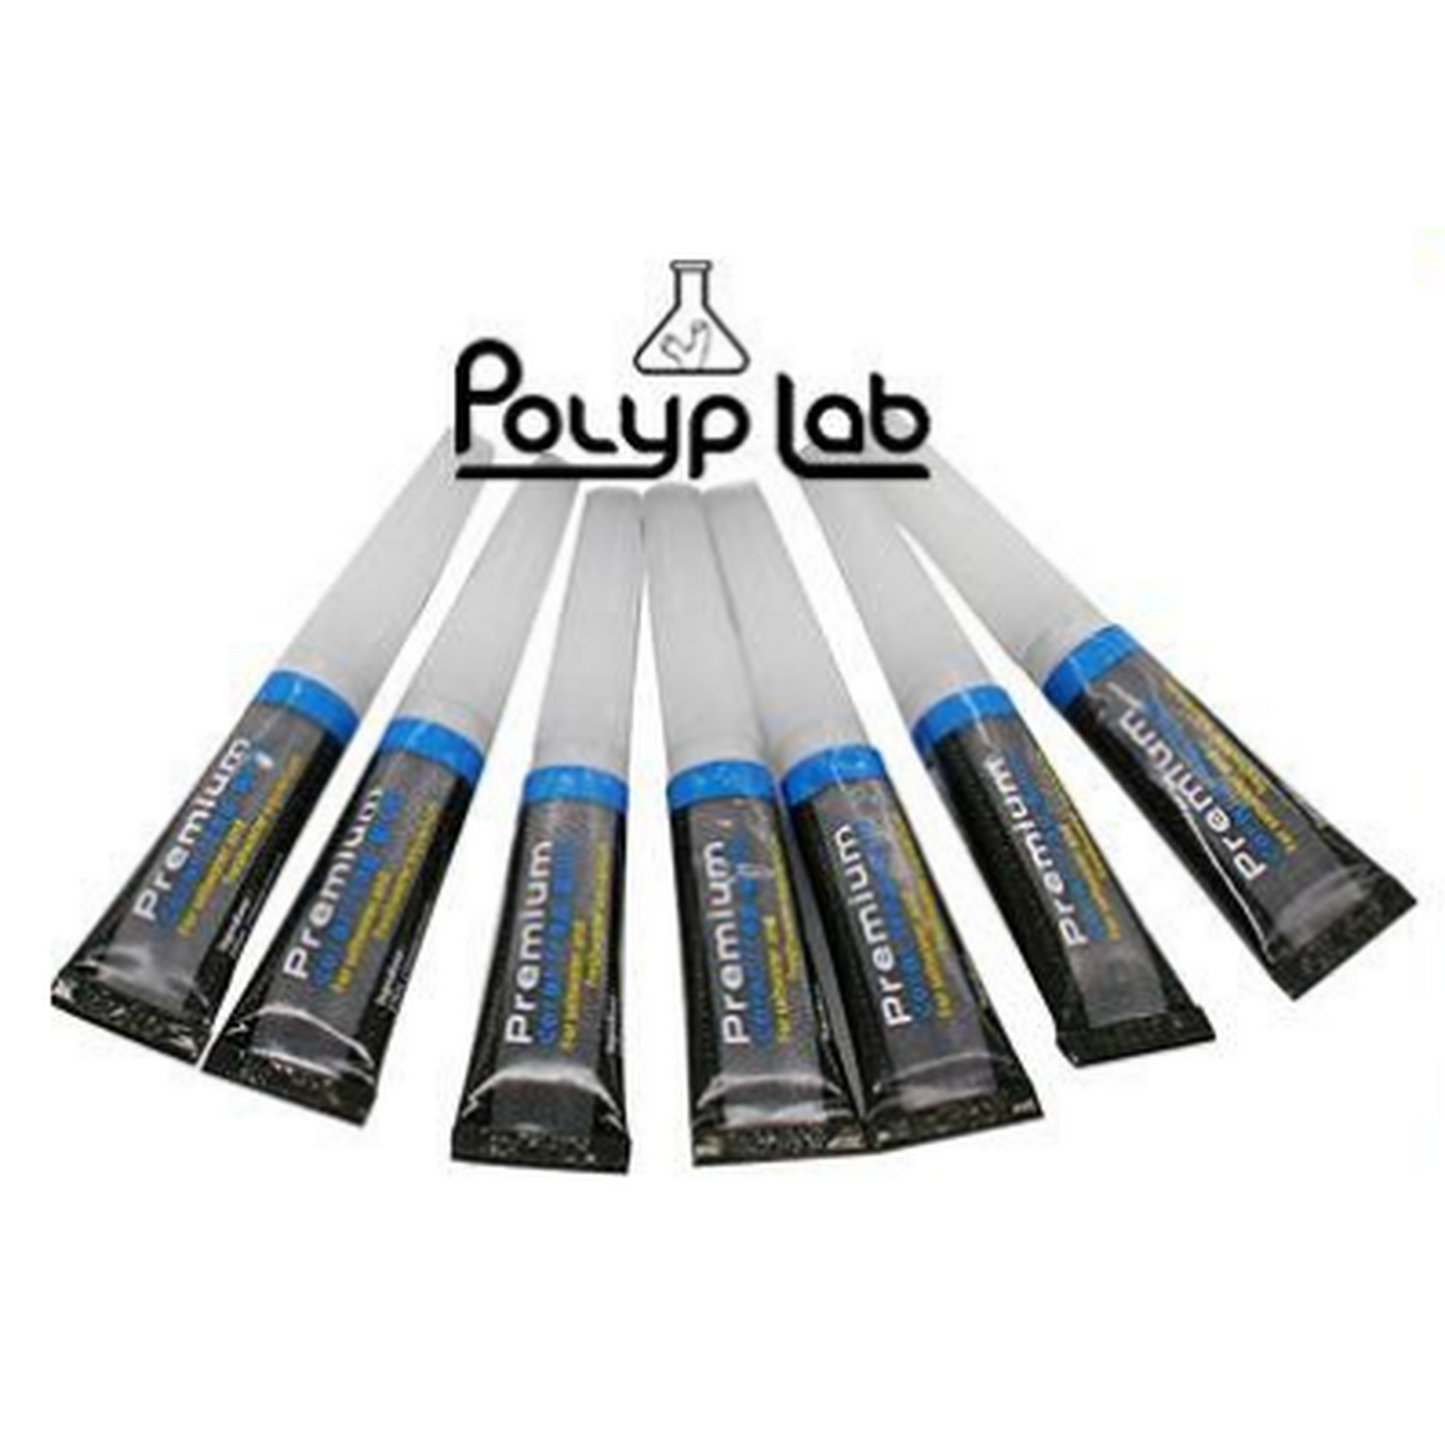 Polyplab Premium Frag Glue (1 oz) Pack 7x 4 gm Singles Tubes